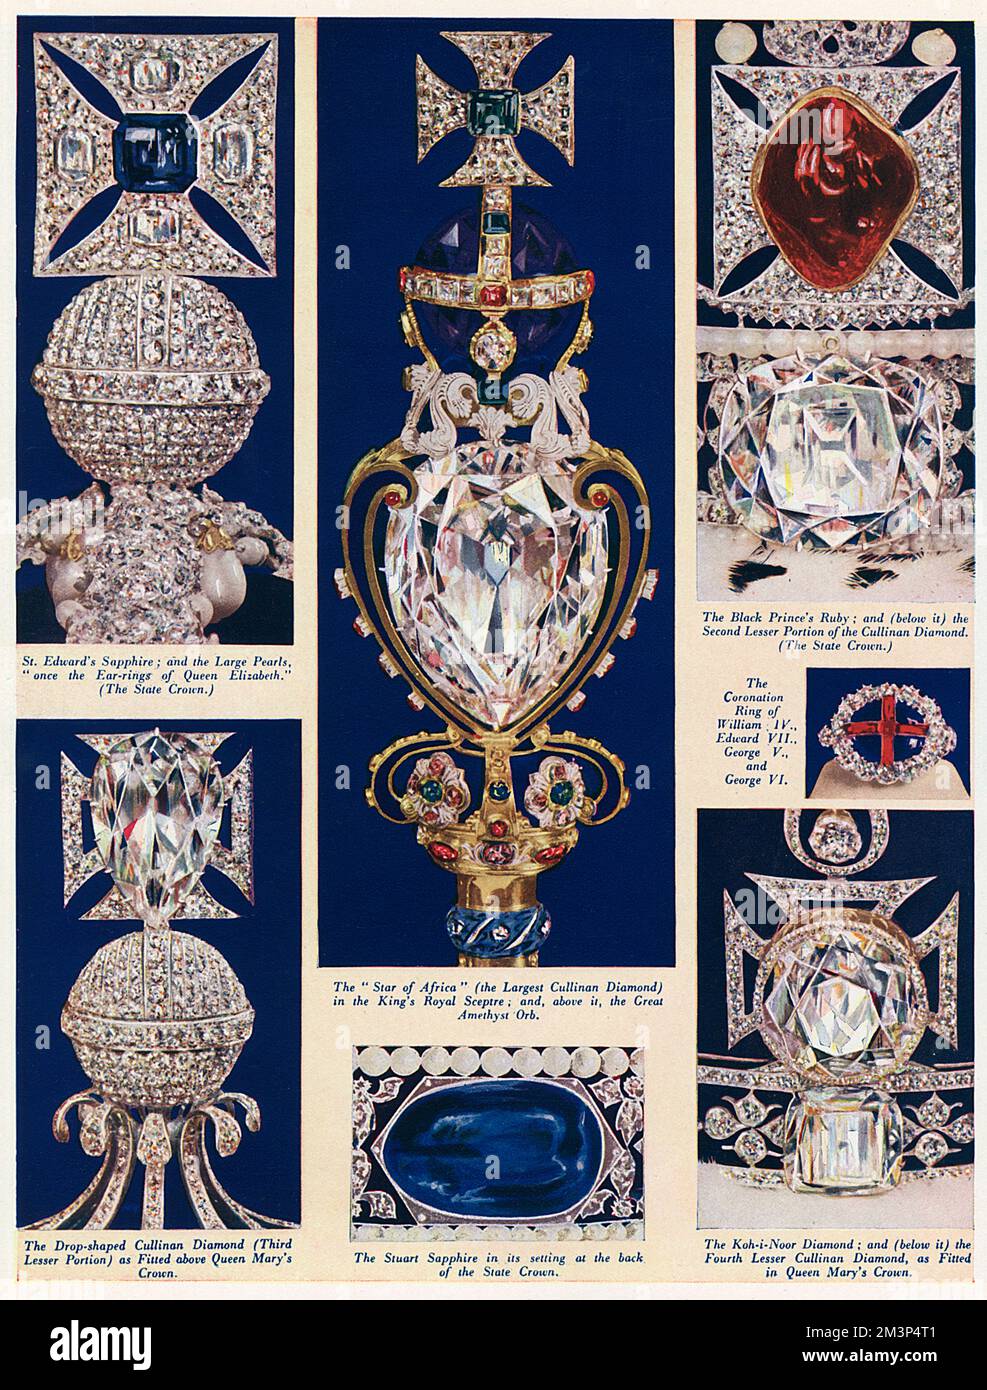 The Crown Jewels: Coronation Regalia